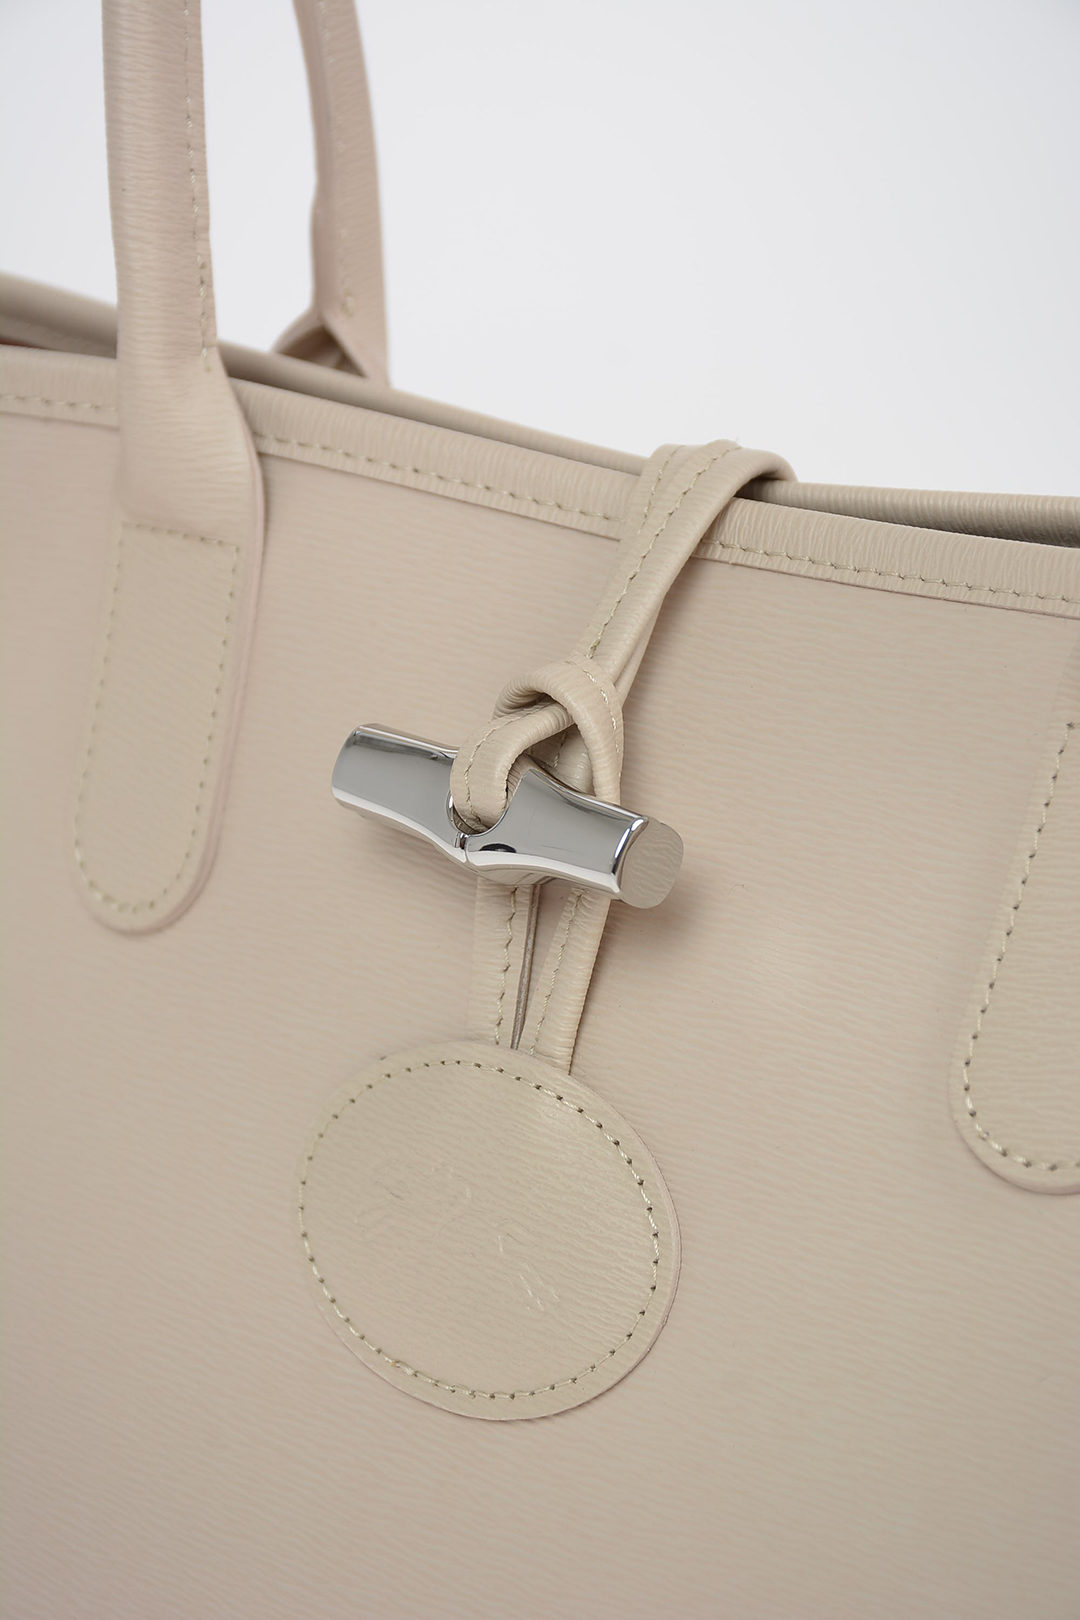 Roseau leather handbag Longchamp Beige in Leather - 33490731